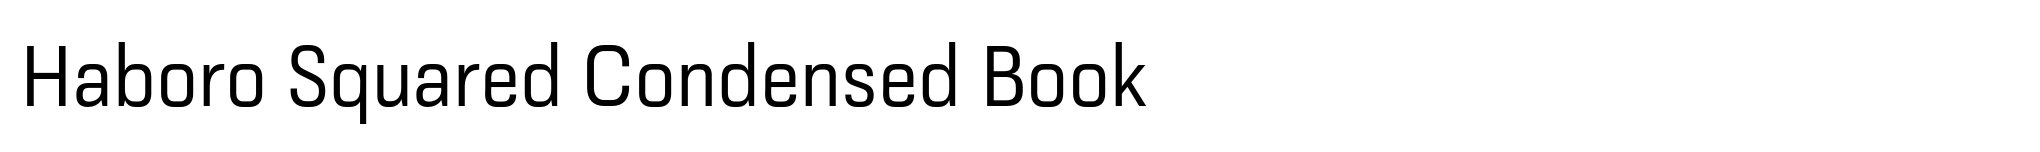 Haboro Squared Condensed Book image